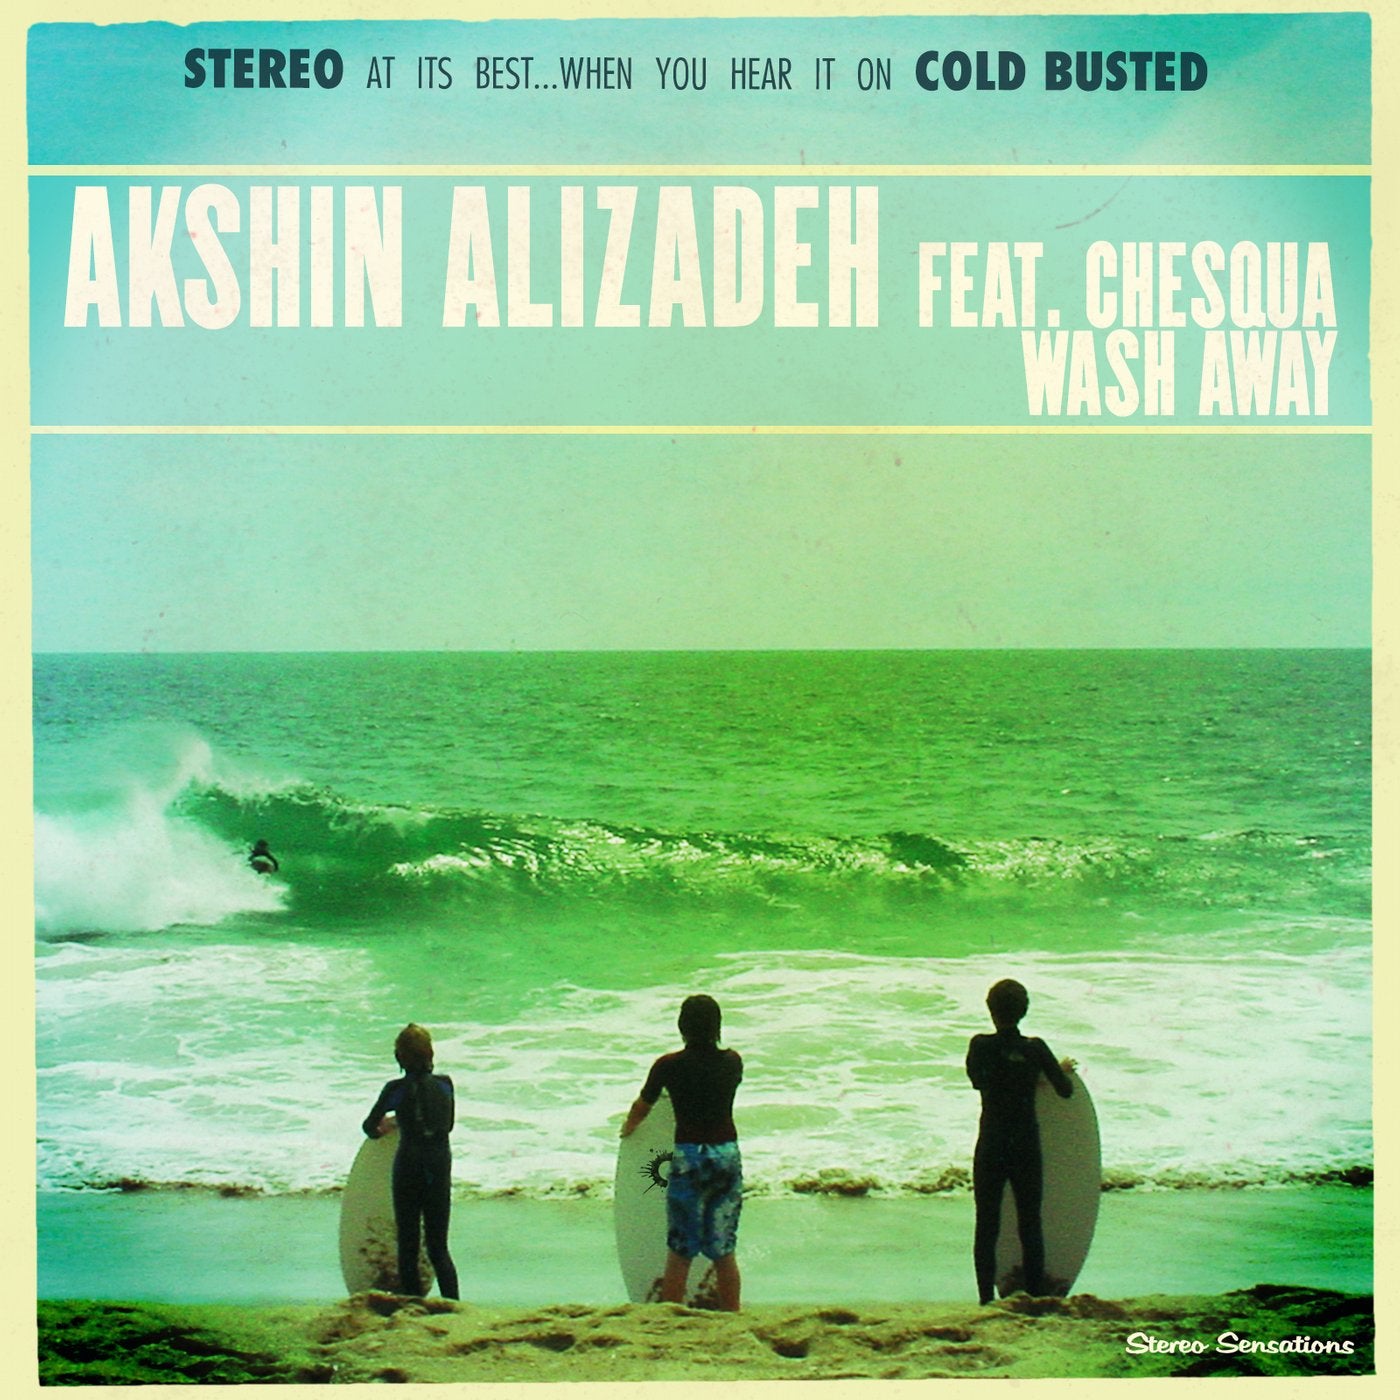 Cold hear. Akshin Alizadeh. Akshin Alizadeh Jazzelyne. Wash away песня. Akshin Alizadeh Biography.